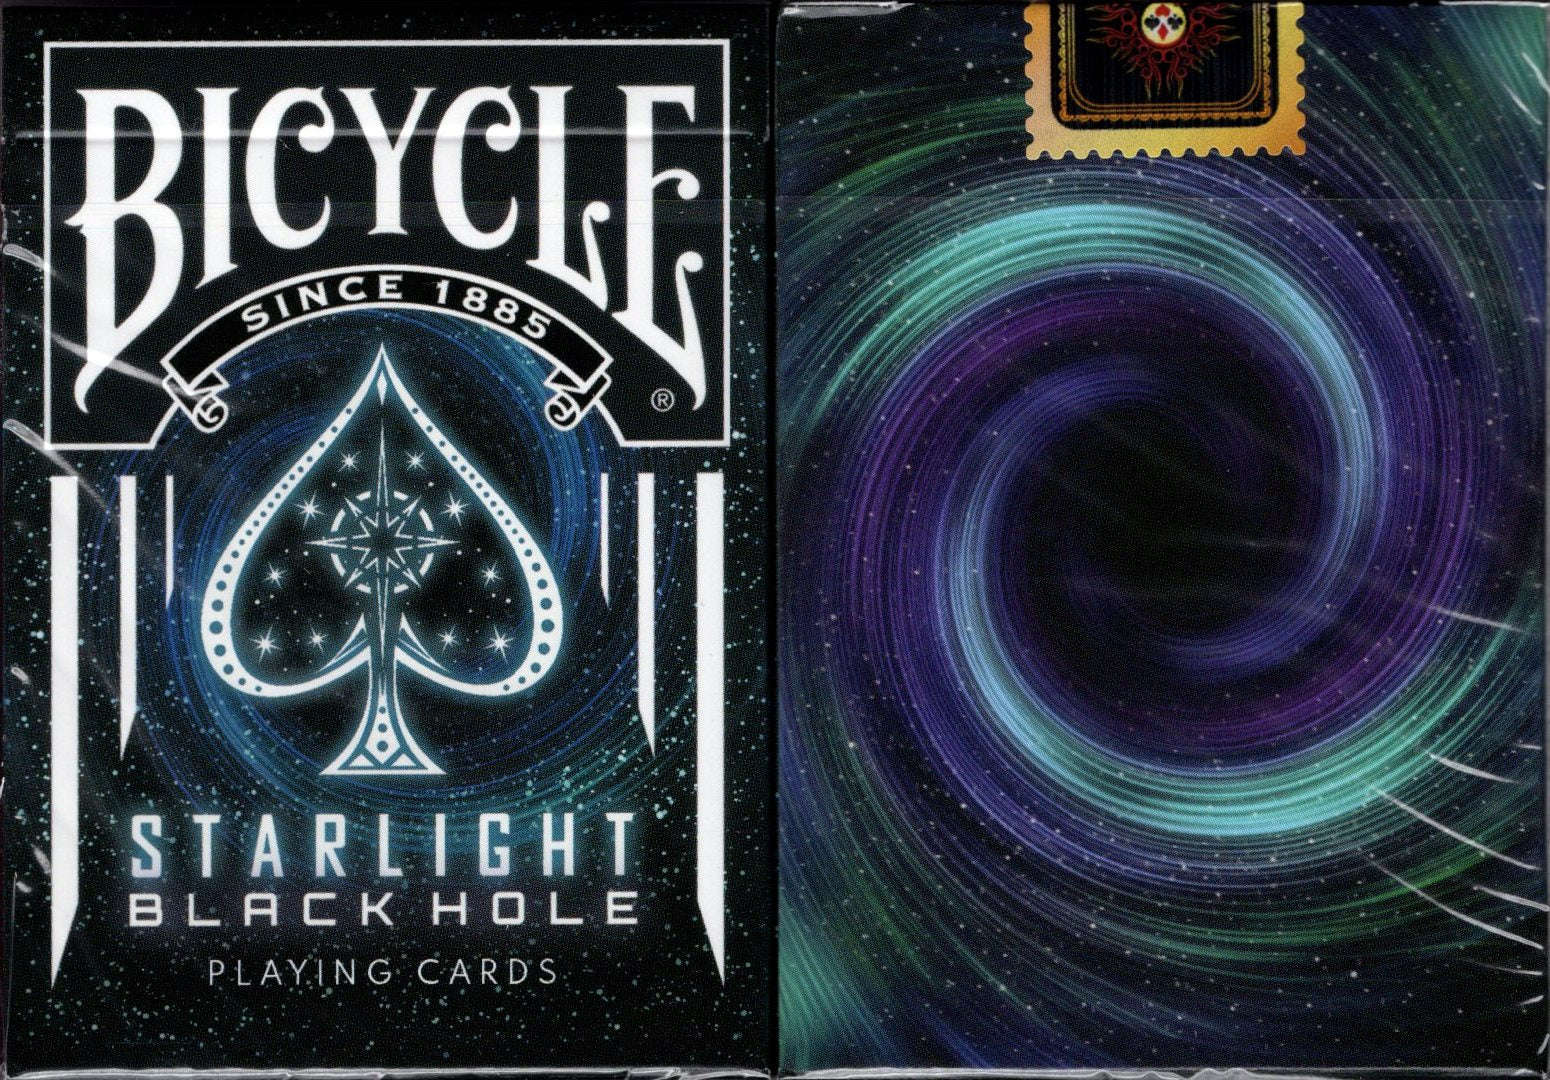 PlayingCardDecks.com-Starlight Black Hole v2 Bicycle Playing Cards